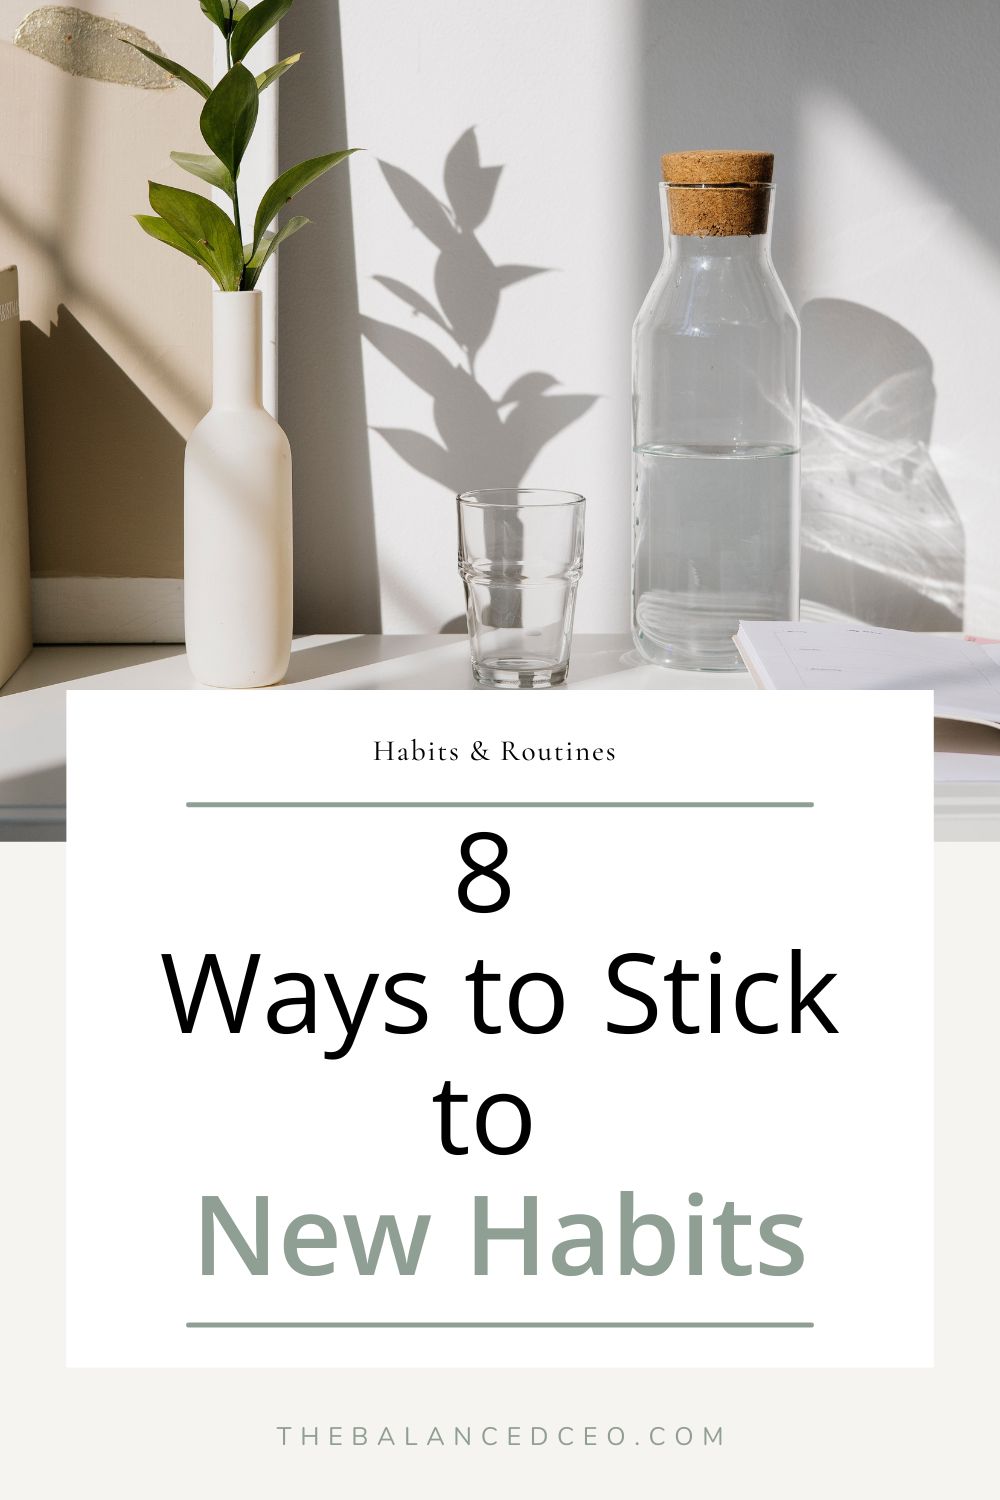 8 Ways to Stick to New Habits